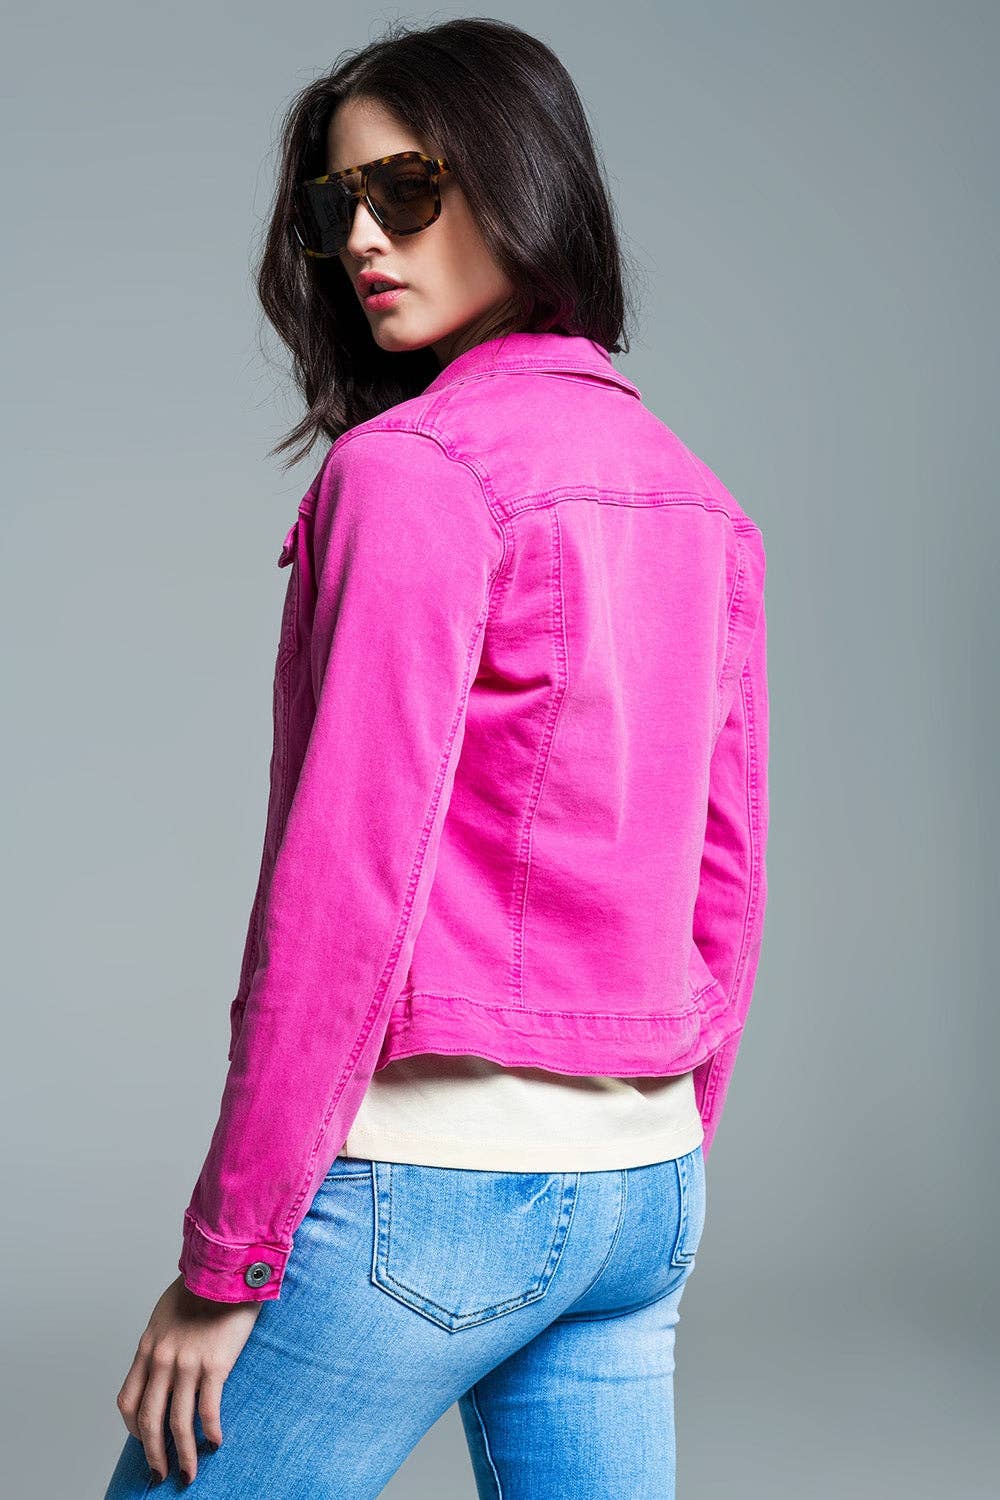 Stretch Denim Jacket With Pockets in Pink